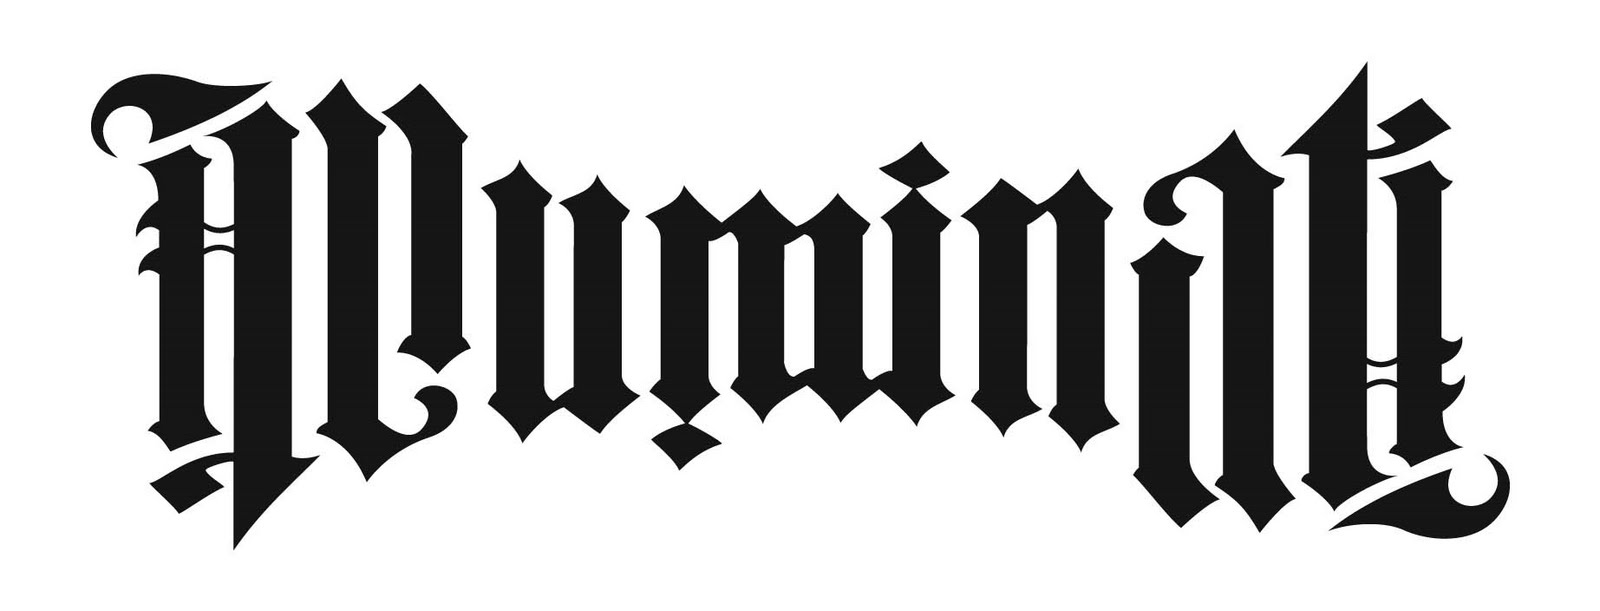 ambigram creator tattoo